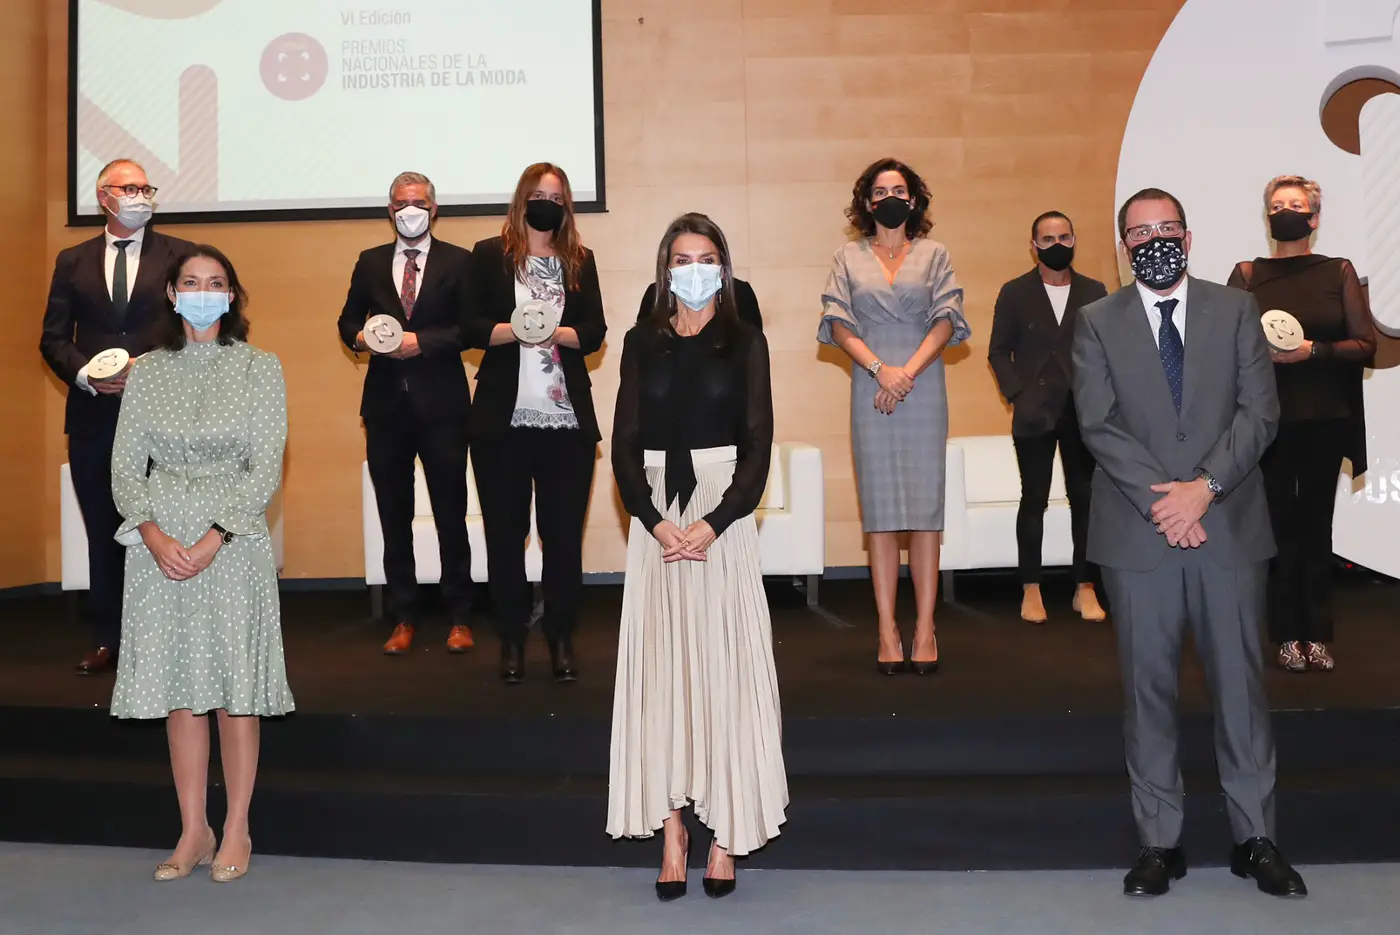 Queen Letizia of Spain in Carolina Herrera coat and Massimo Dutti skirt for National Fashion Awards 2020